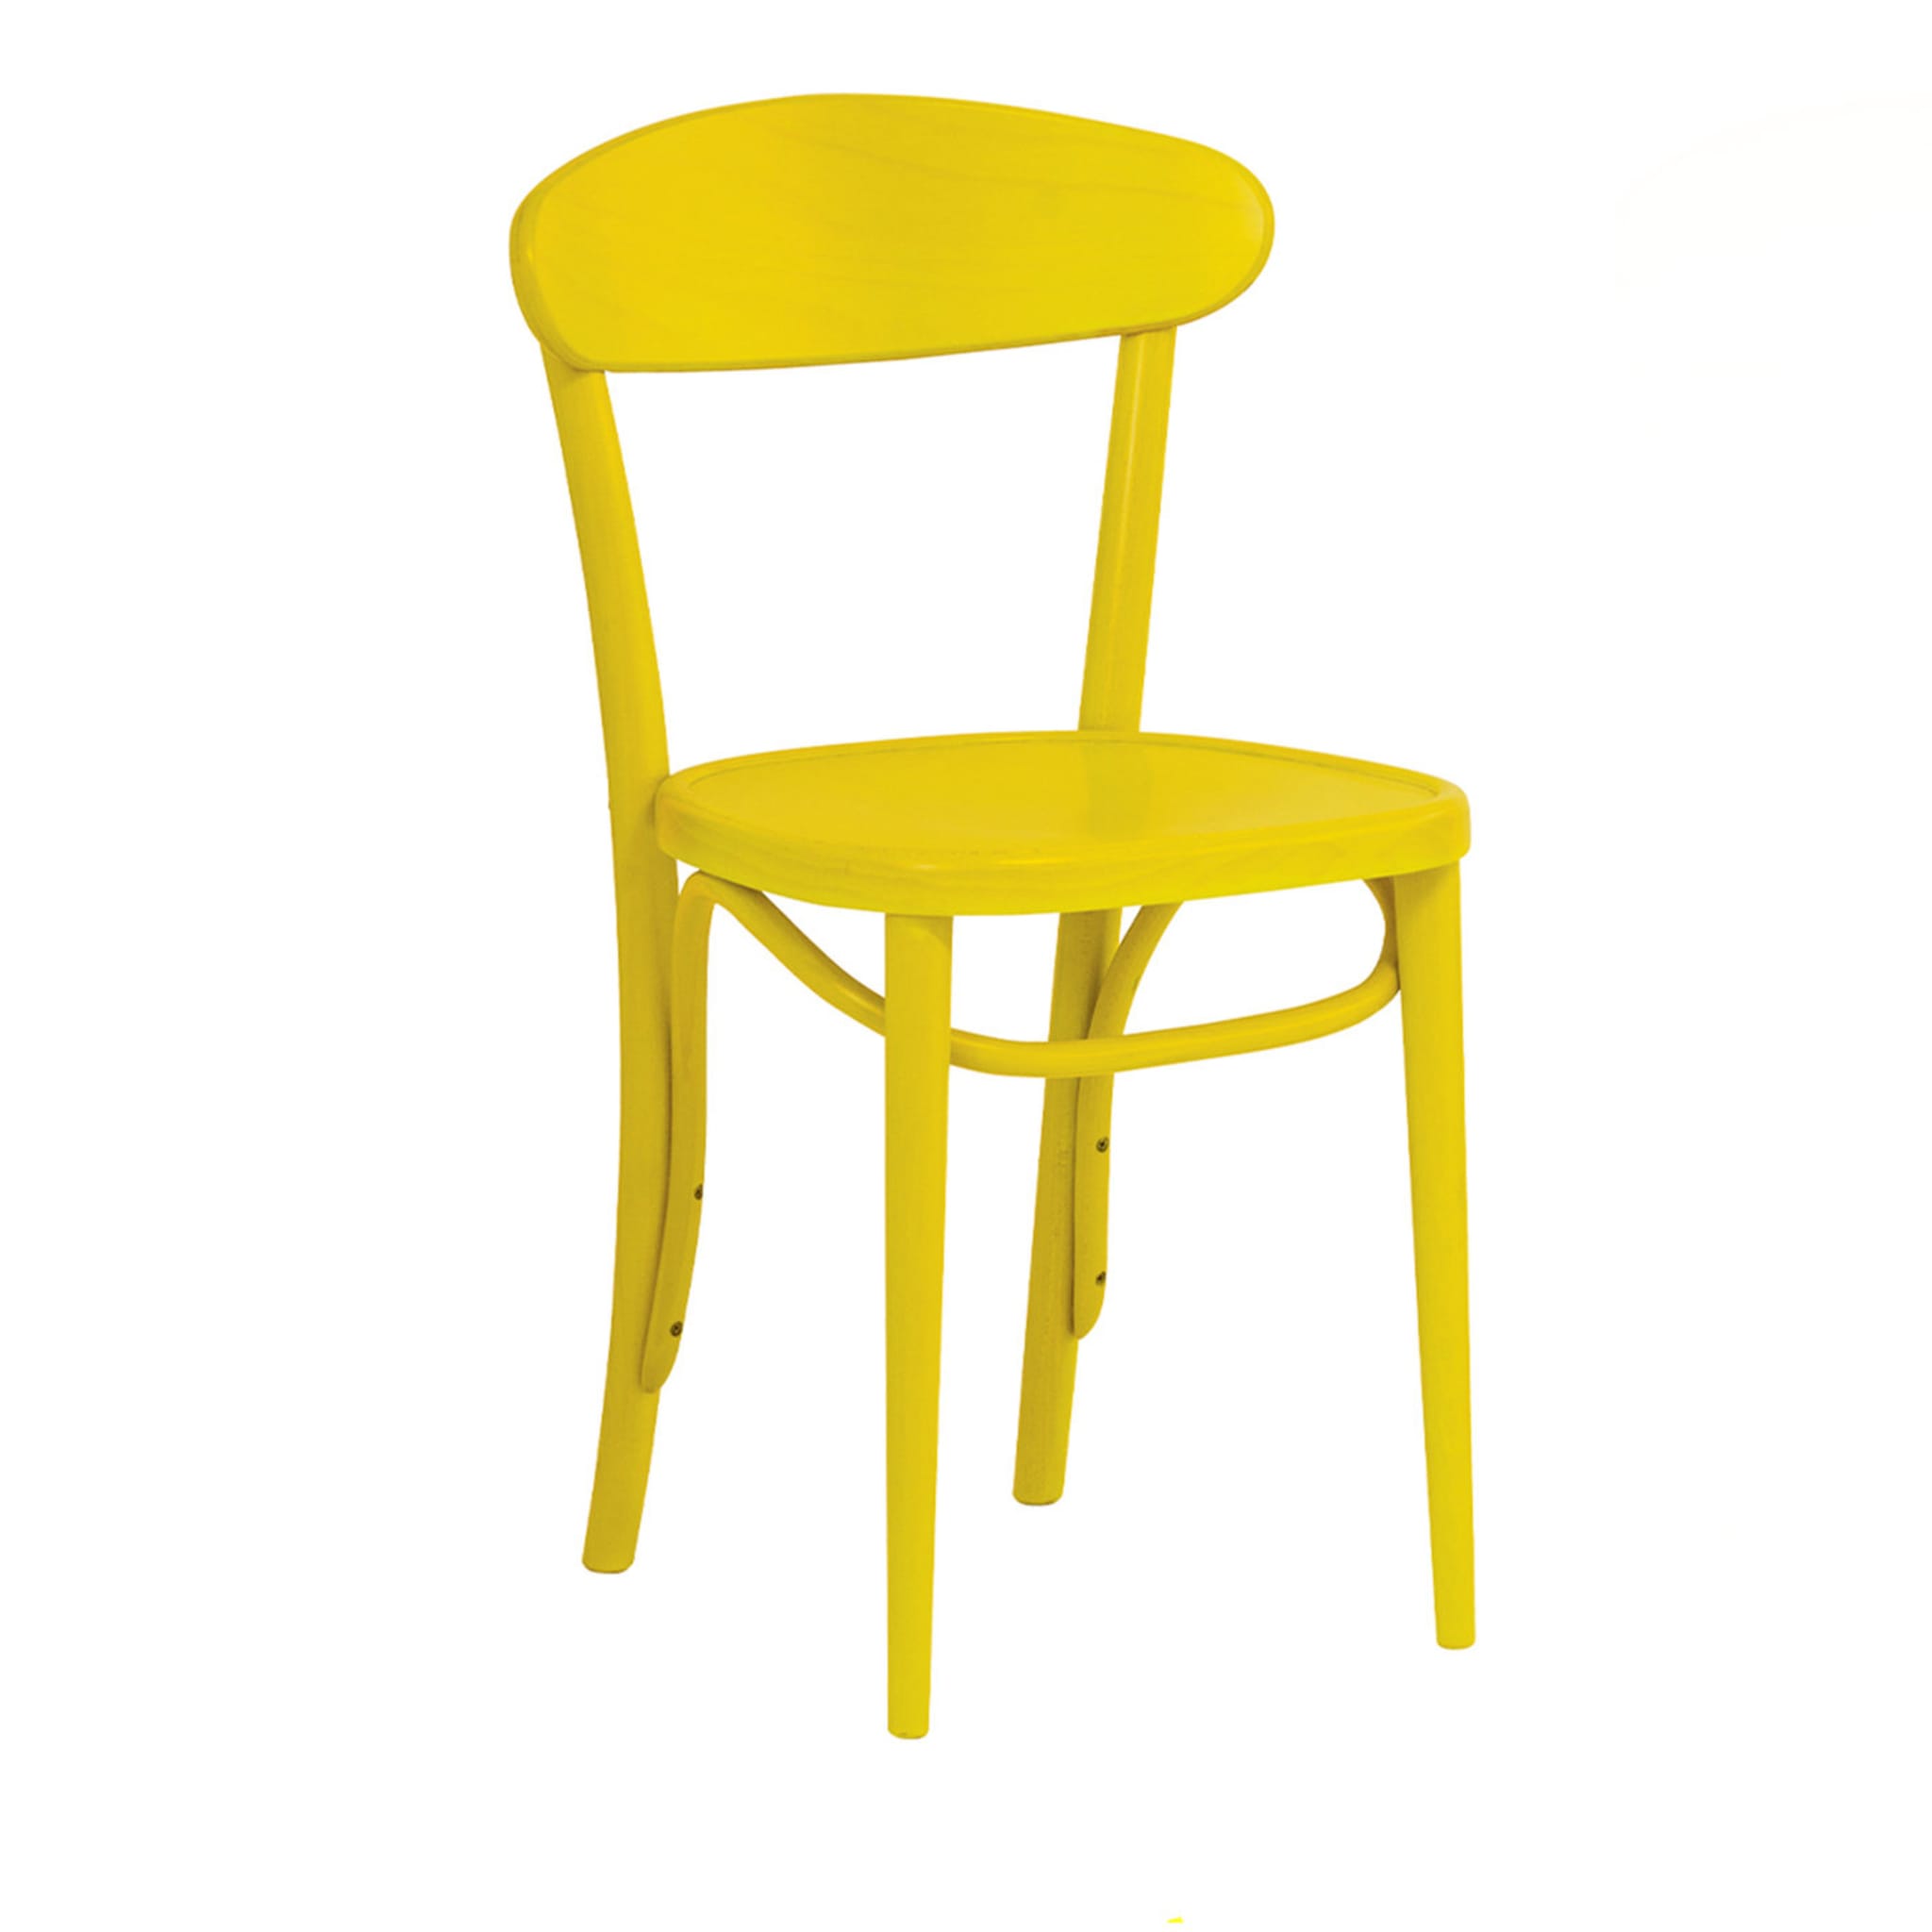 Patty Set of 2 Yellow Chairs - Main view